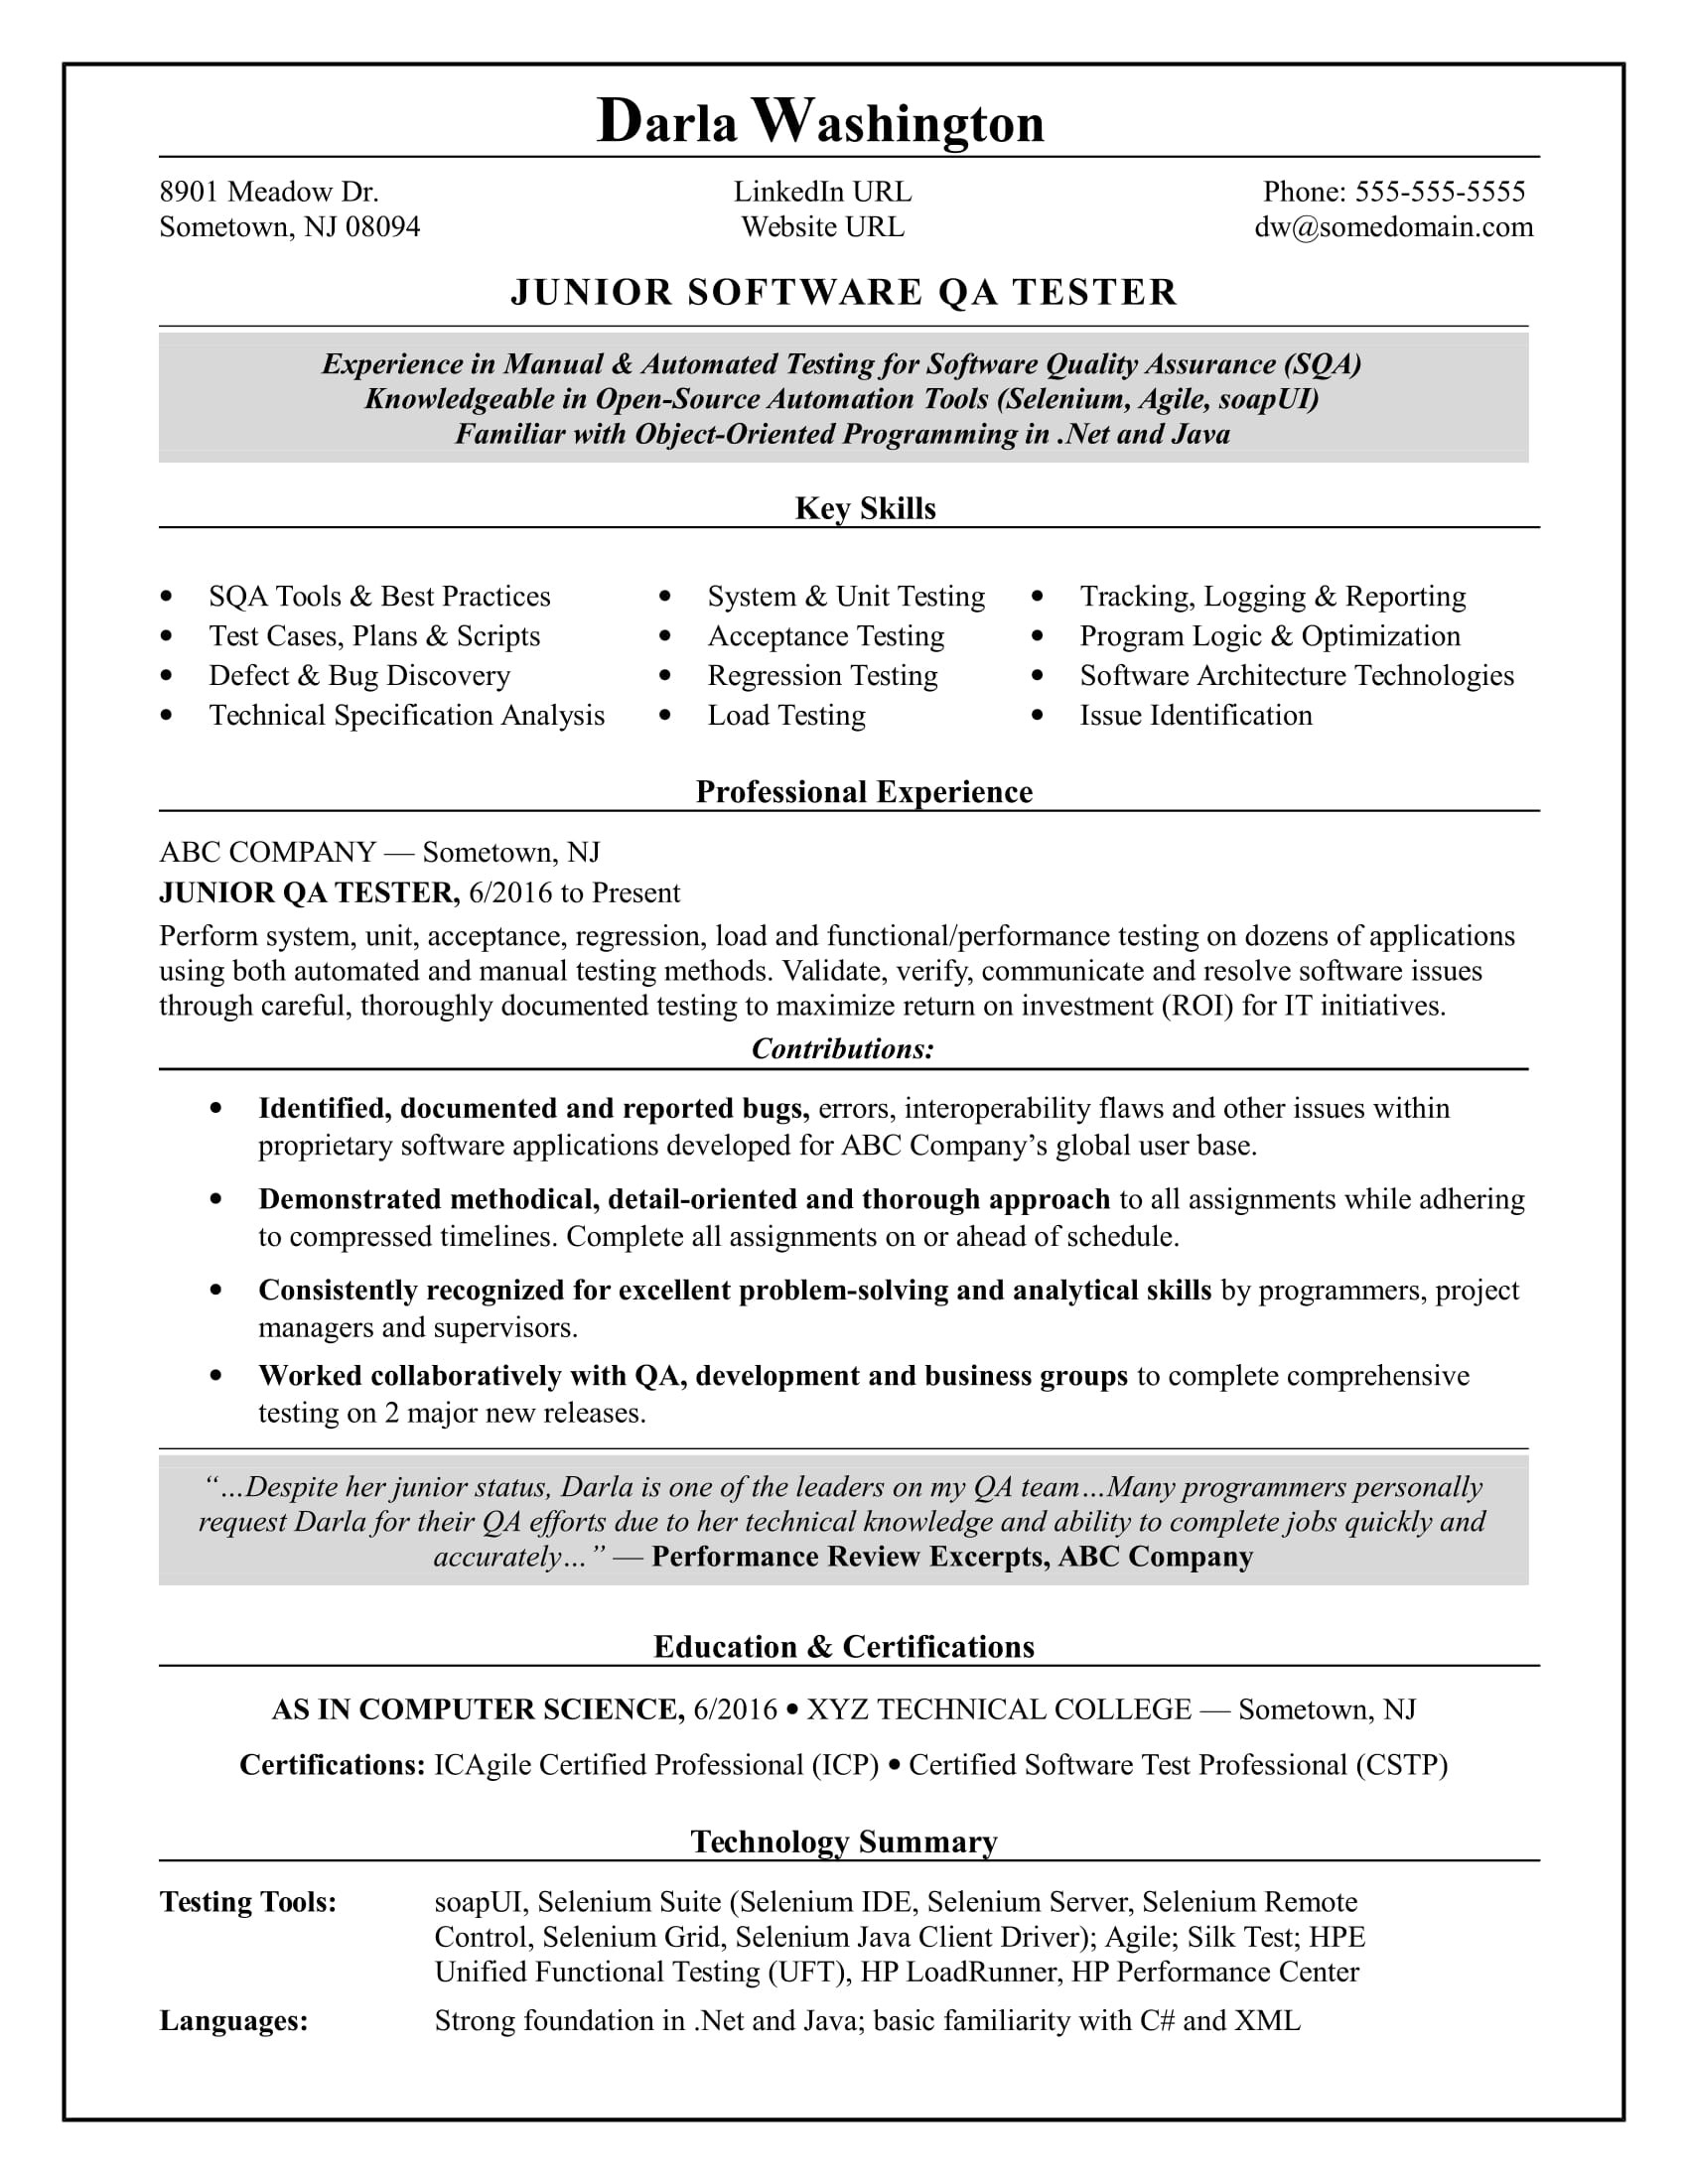 Software Testing Resume Sample for Freshers Entry-level software Tester Resume Monster.com